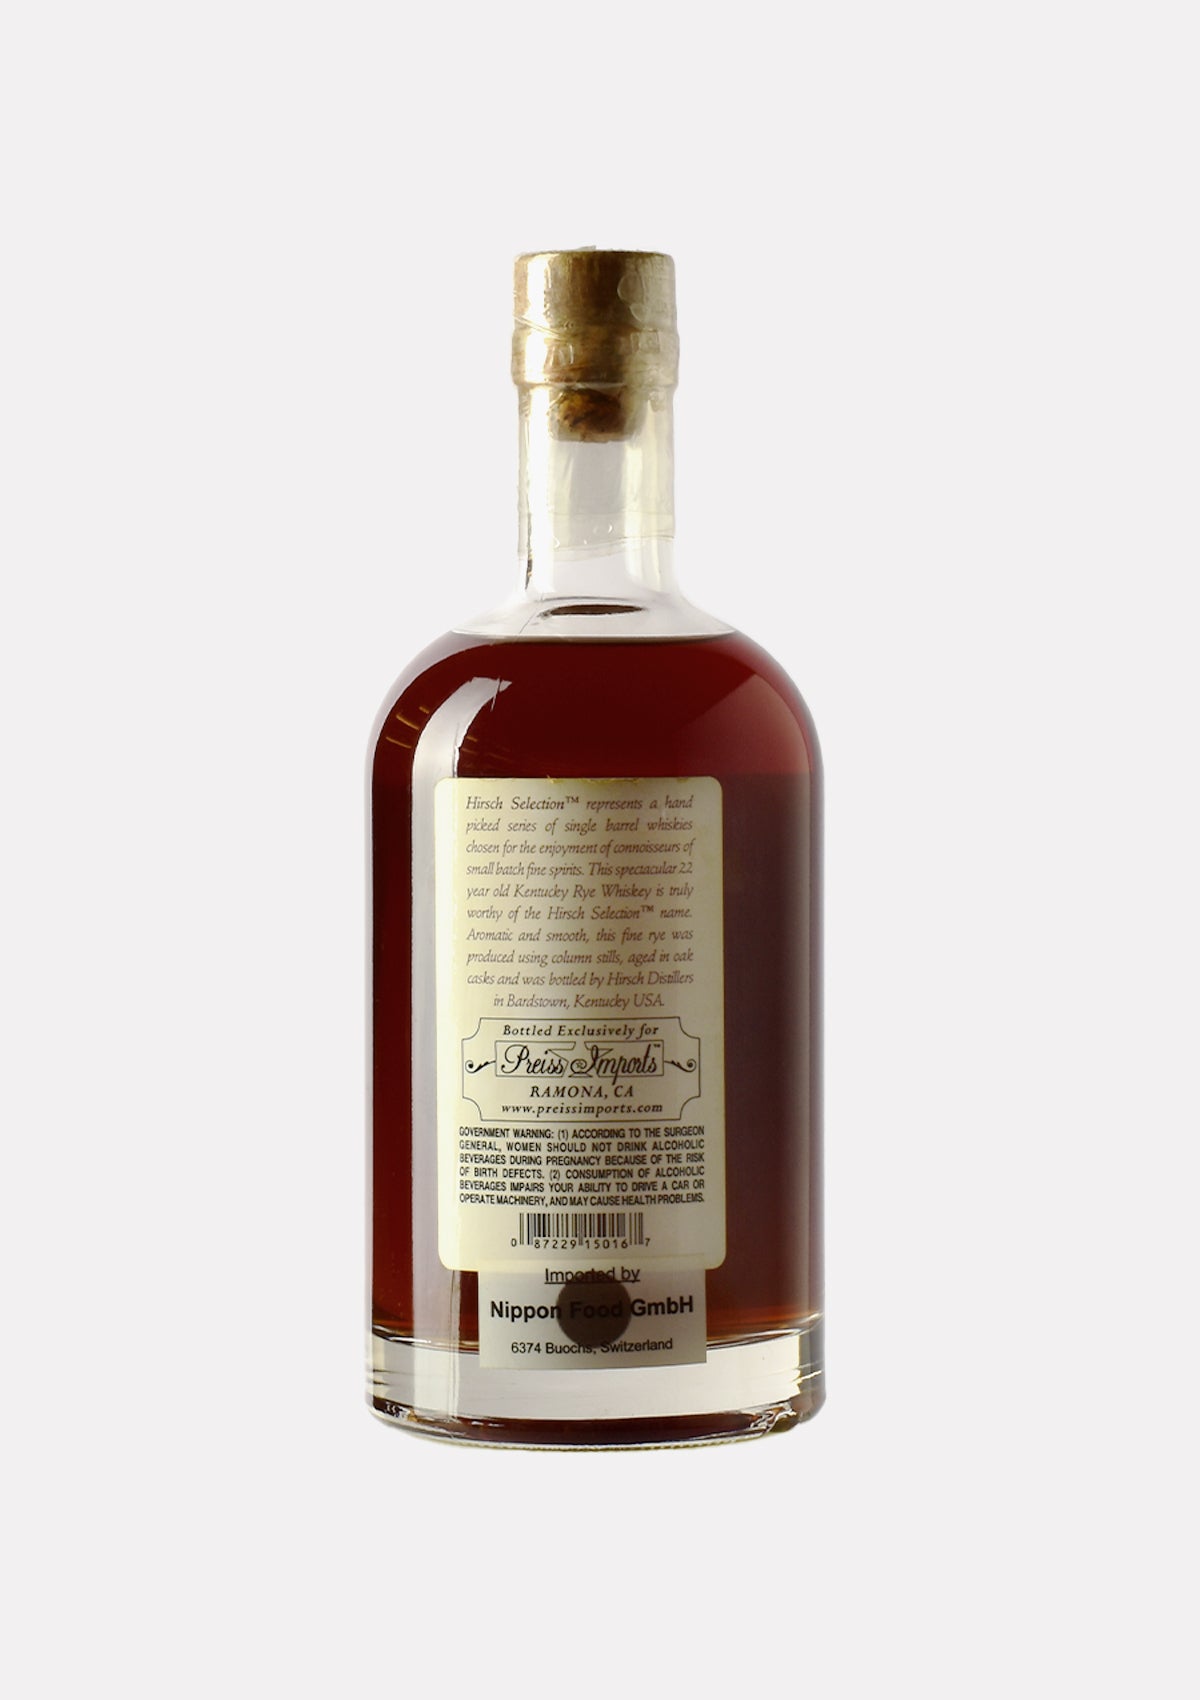 Hirsch Selection Kentucky Straight Rye Whiskey 22 years